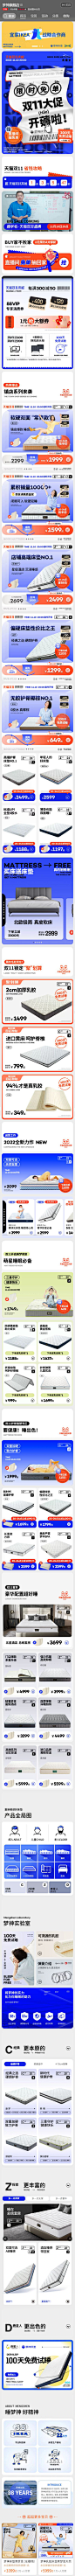 FireShot Pro Webpage Screenshot #013 - '梦神旗舰店' - mengshen